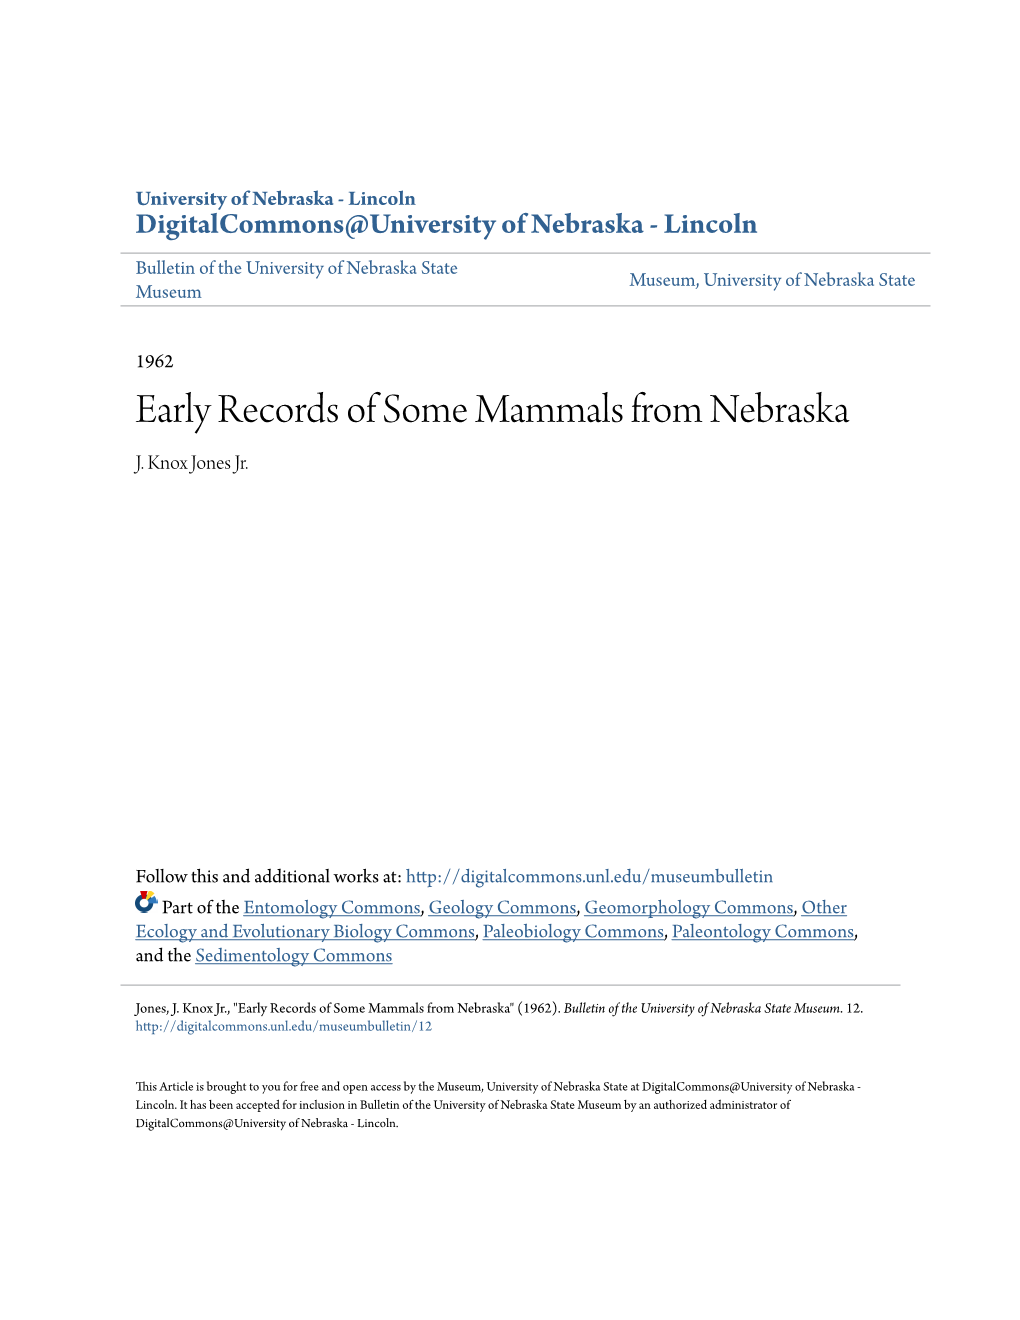 Early Records of Some Mammals from Nebraska J